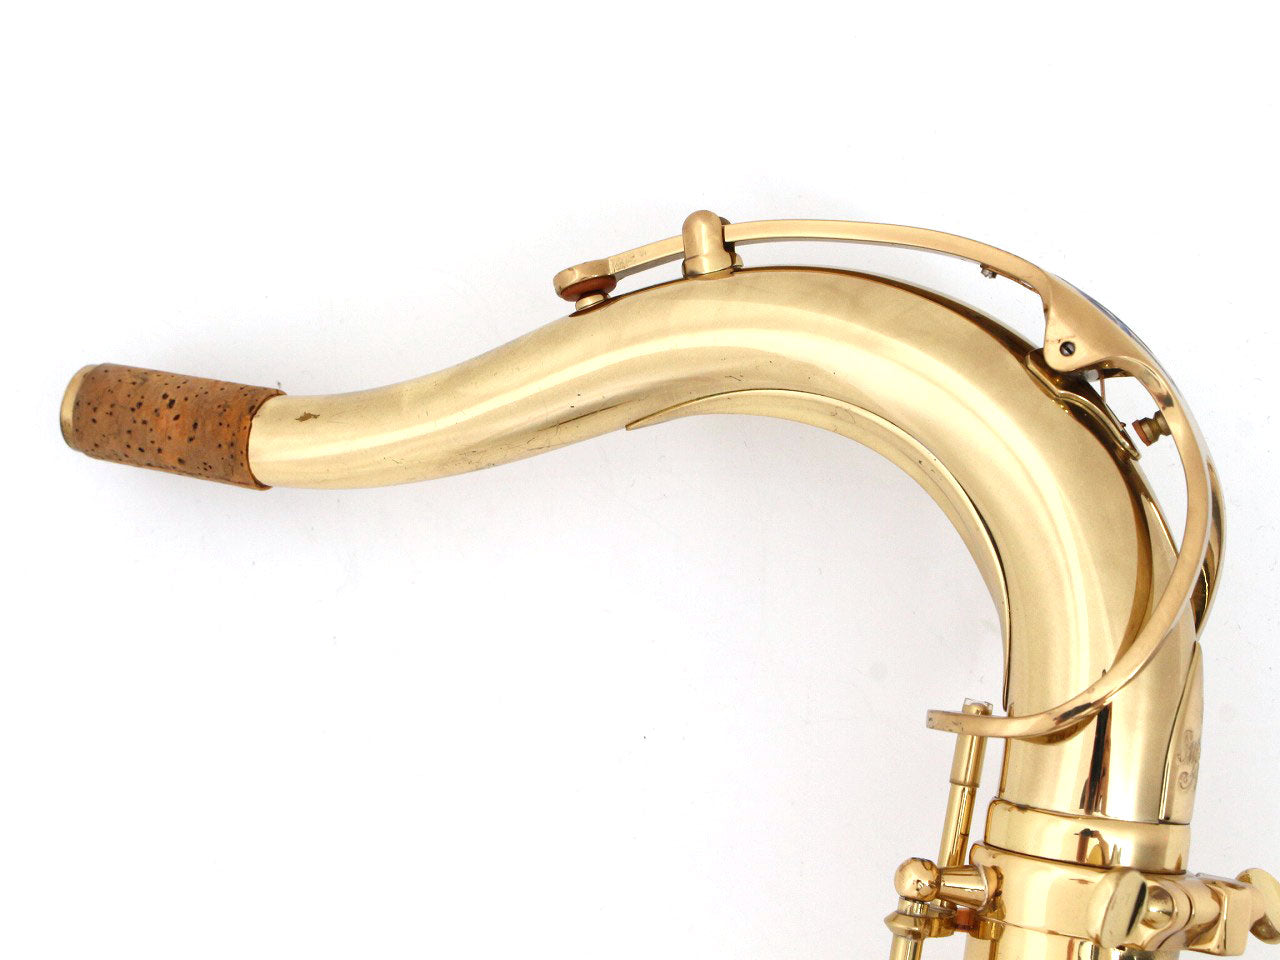 [SN 541485] USED SELMER / Tenor saxophone SA80 SERIE II Series 2 with engraving [11]